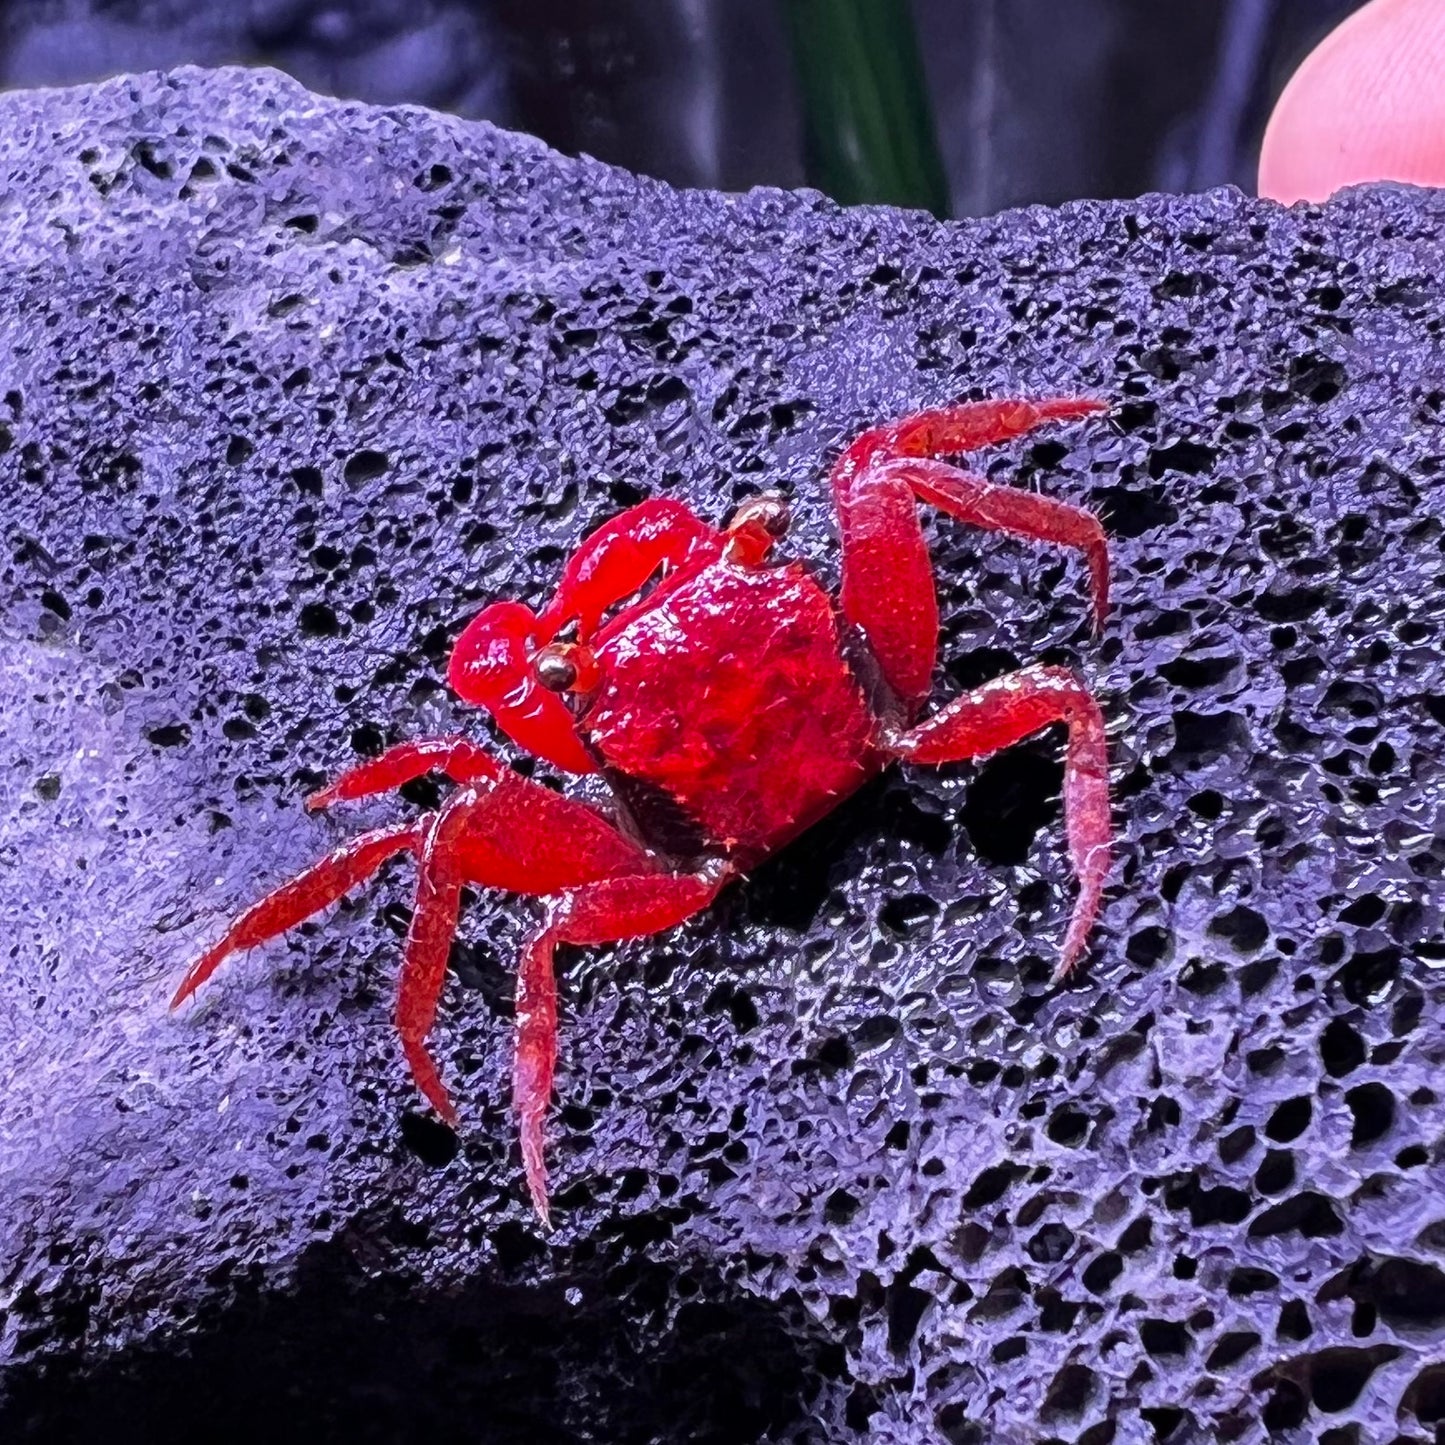 Tomato Vampire Crab ( Geosesarma 'Red Ruby' )